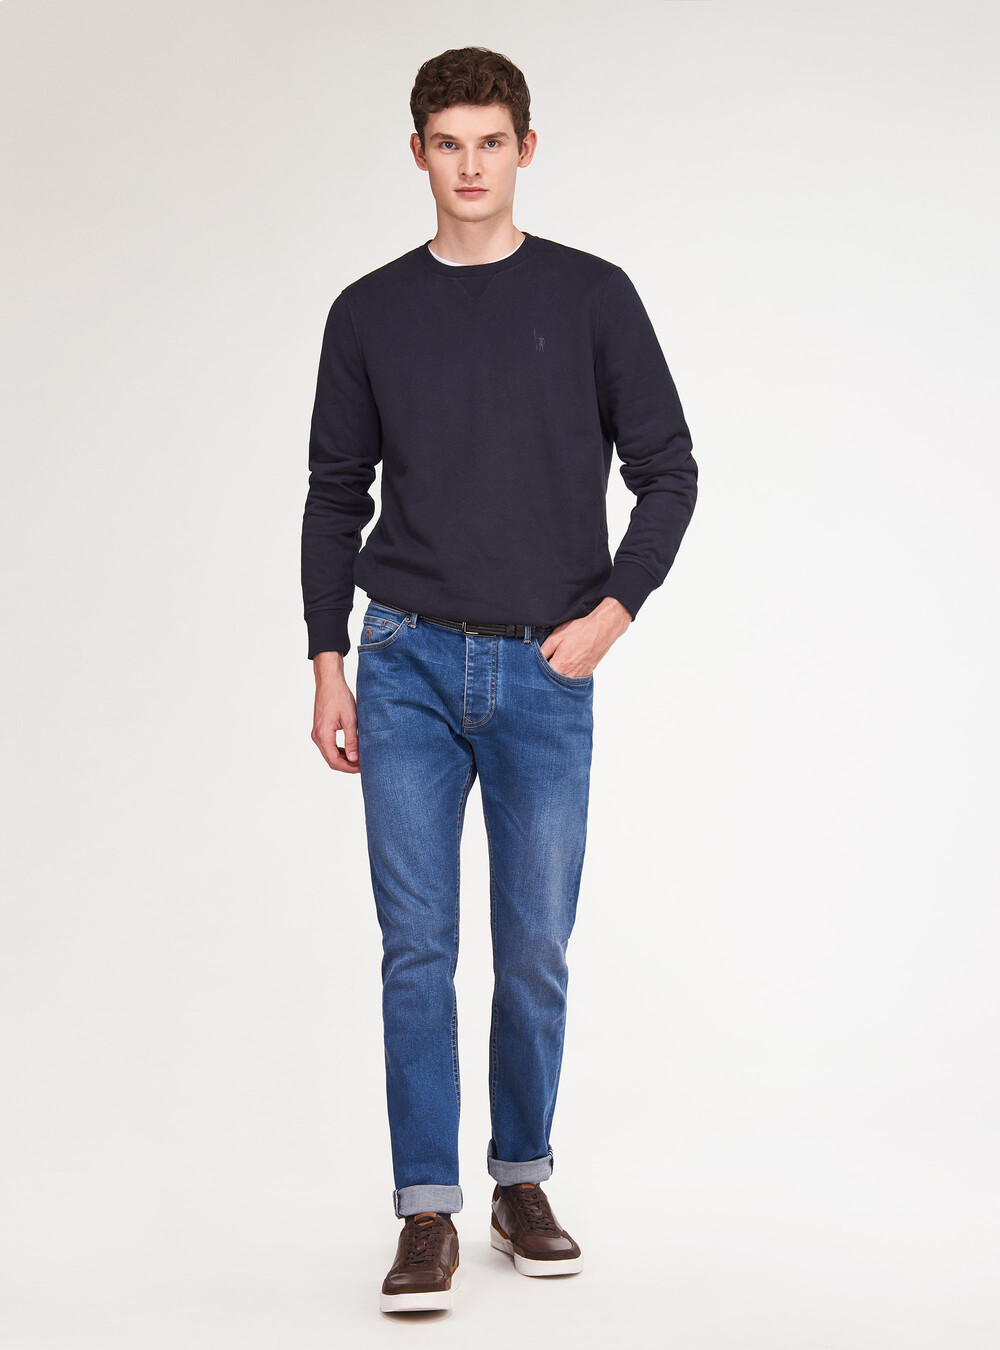 Round-neck sweatshirt | GutteridgeEU | Men's Sweatshirts